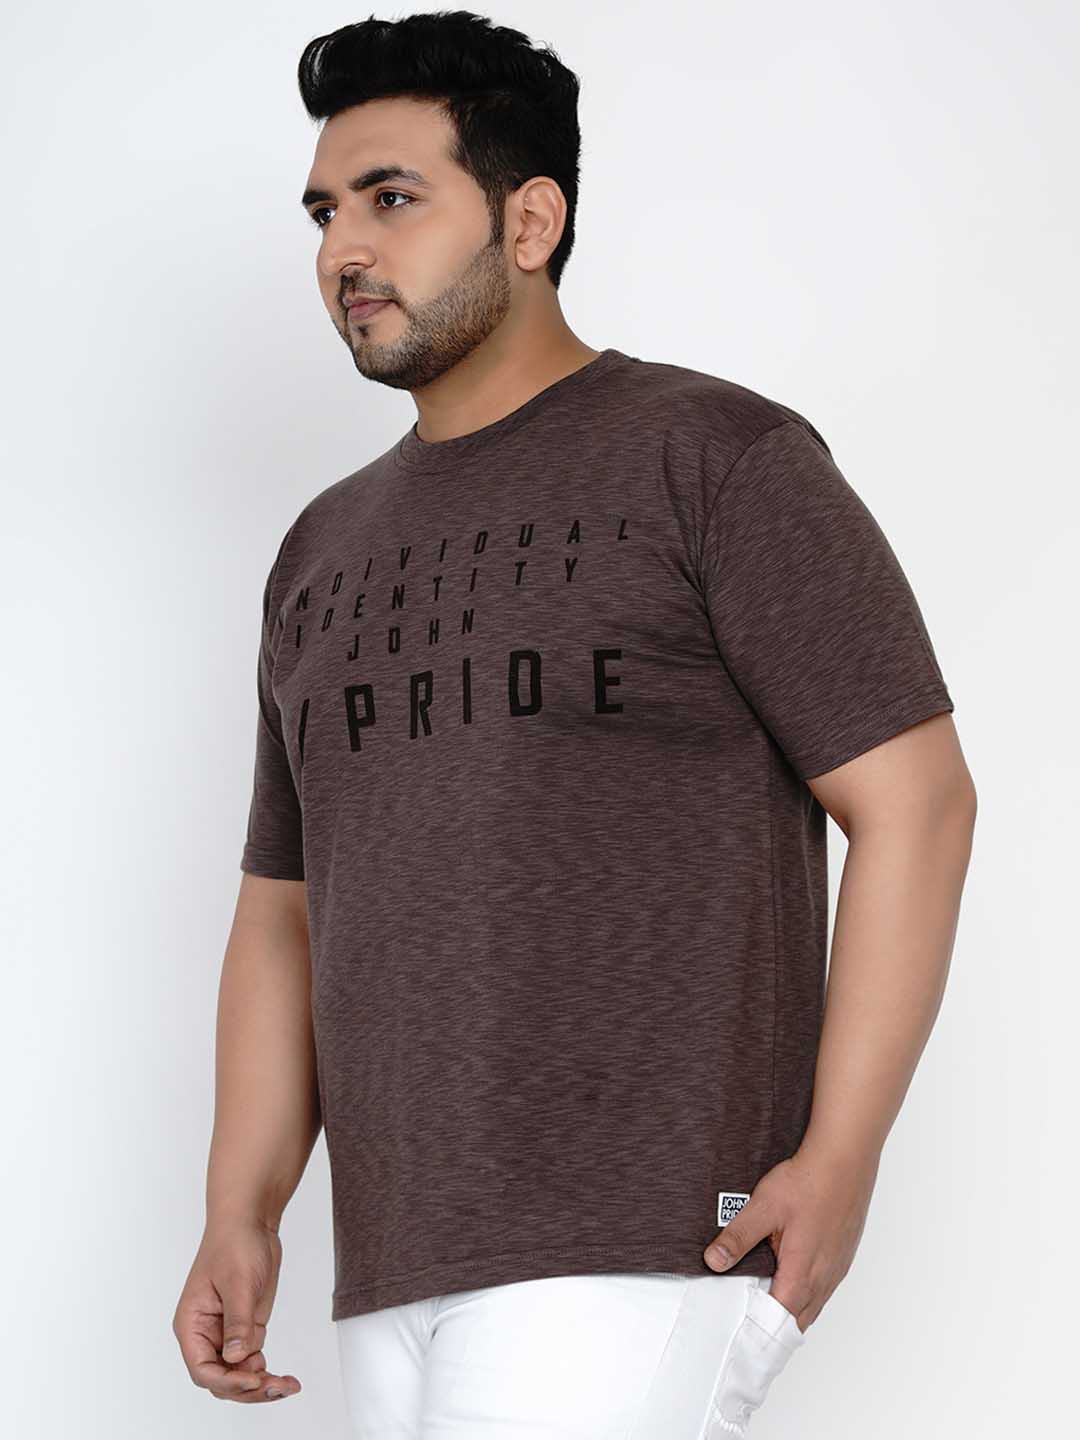 Plus Size Mens T shirts  Buy 3XL, 4XL, 5XL, 6XL Size Online